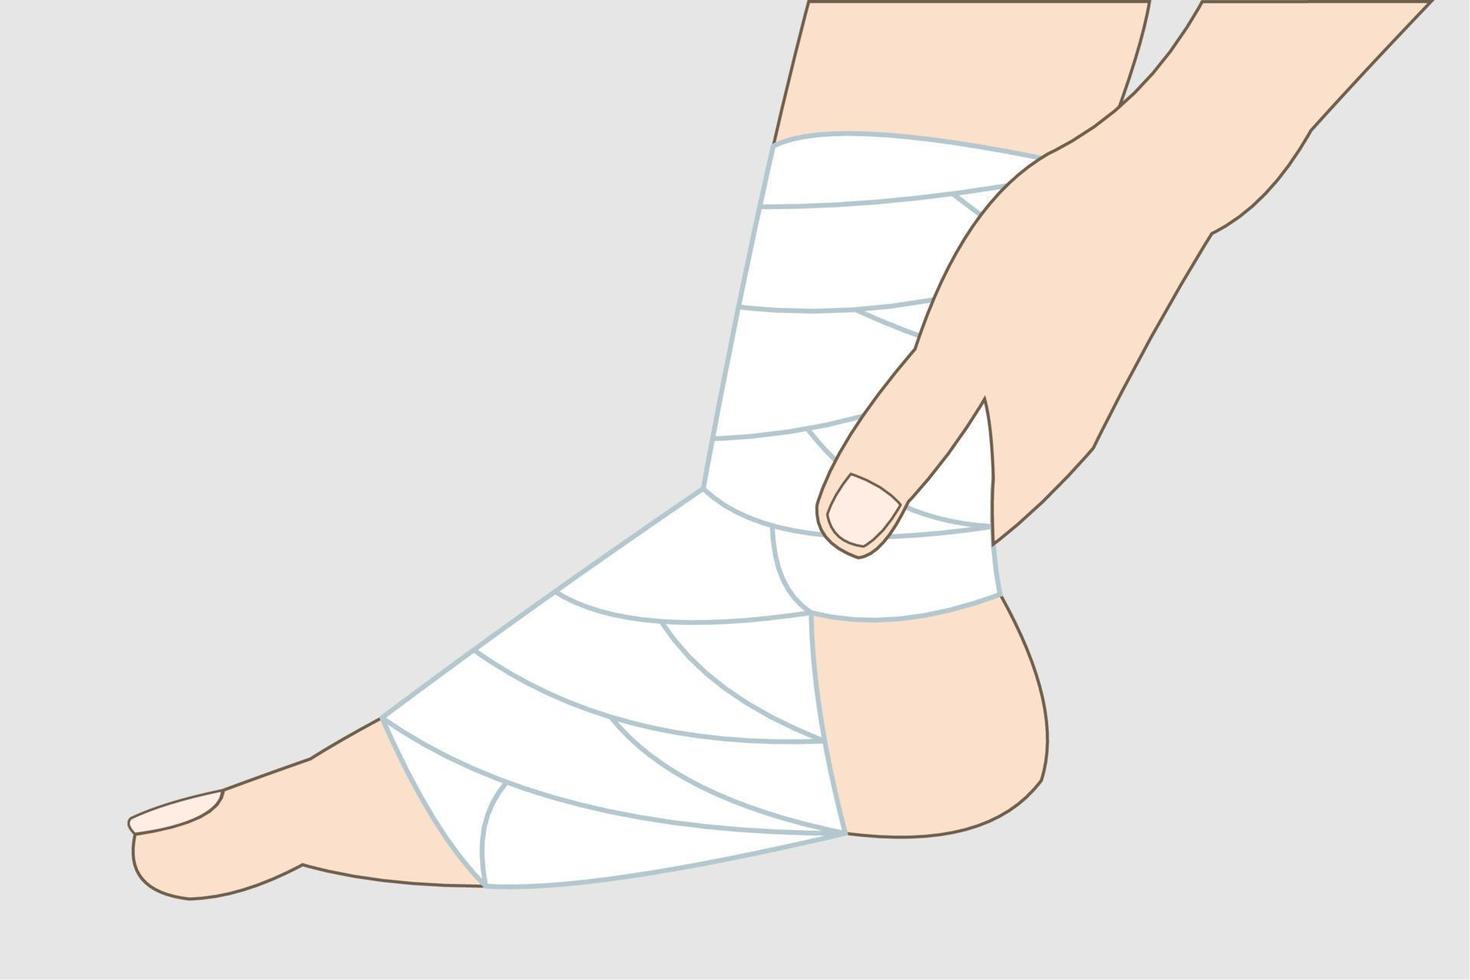 leg in a cast or bandage. vector illustration